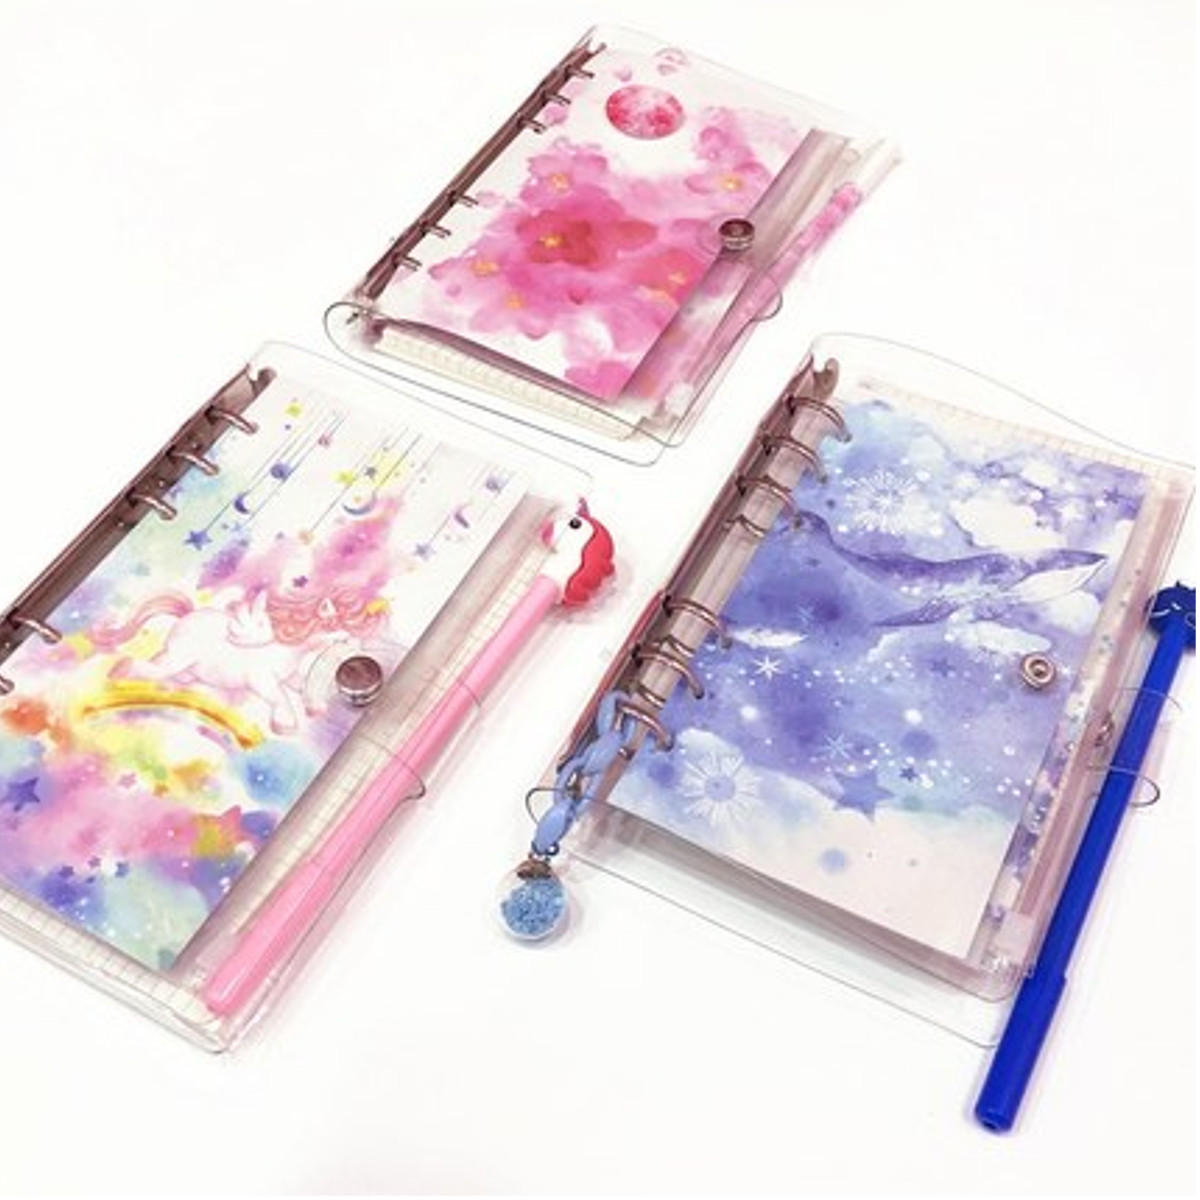 

Kawaii Cute A5/A6 Записная книжка для ноутбука Ins Girl Дневник Единорога Океан Вишни в цвету Серии Блокнот Планировщик